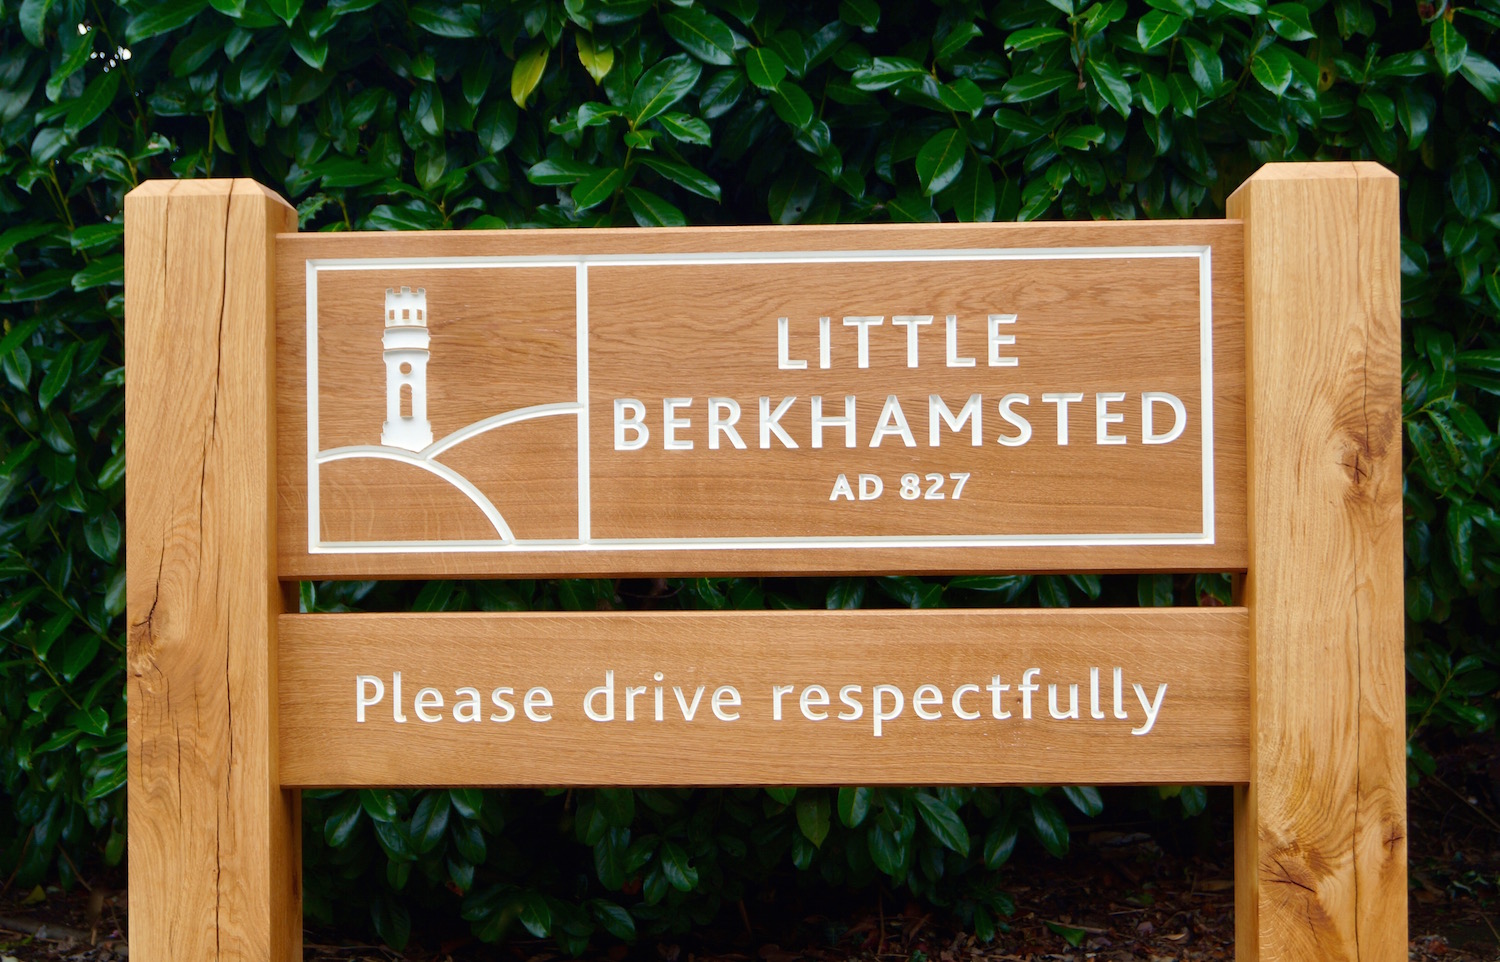 little-berkhamsted-vilage-oak-signs-makemesomethingspecial.com